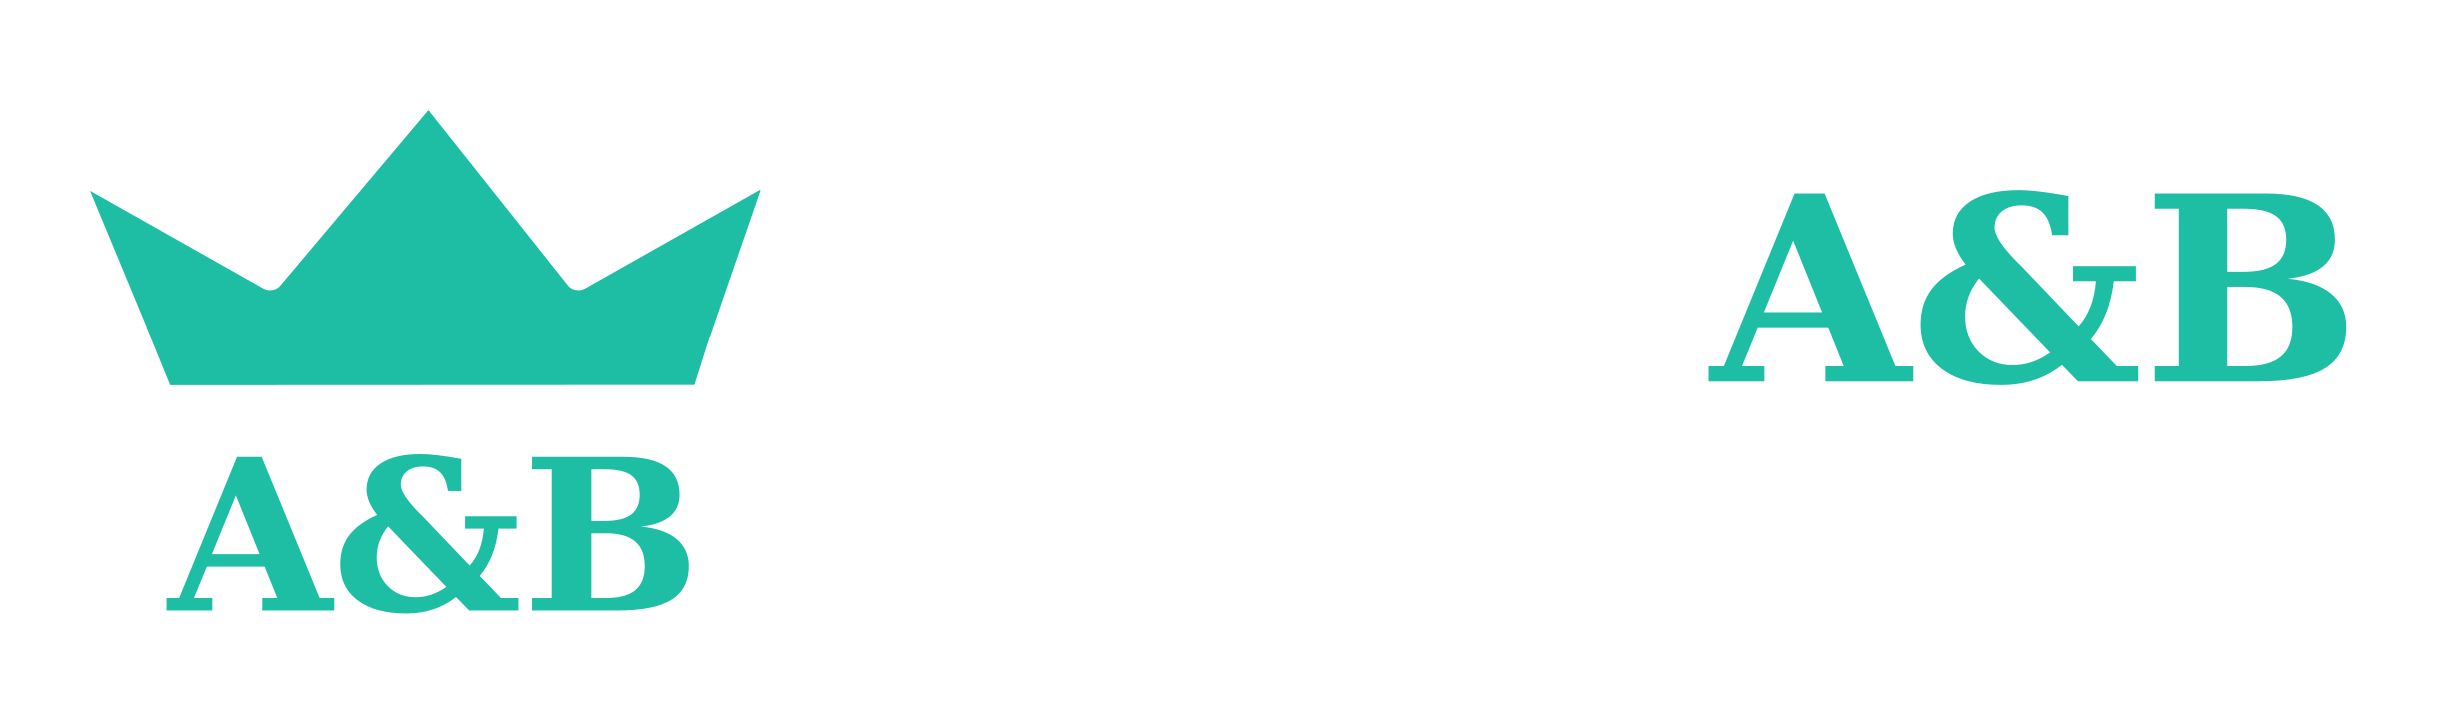 Hotel A&B Internacional